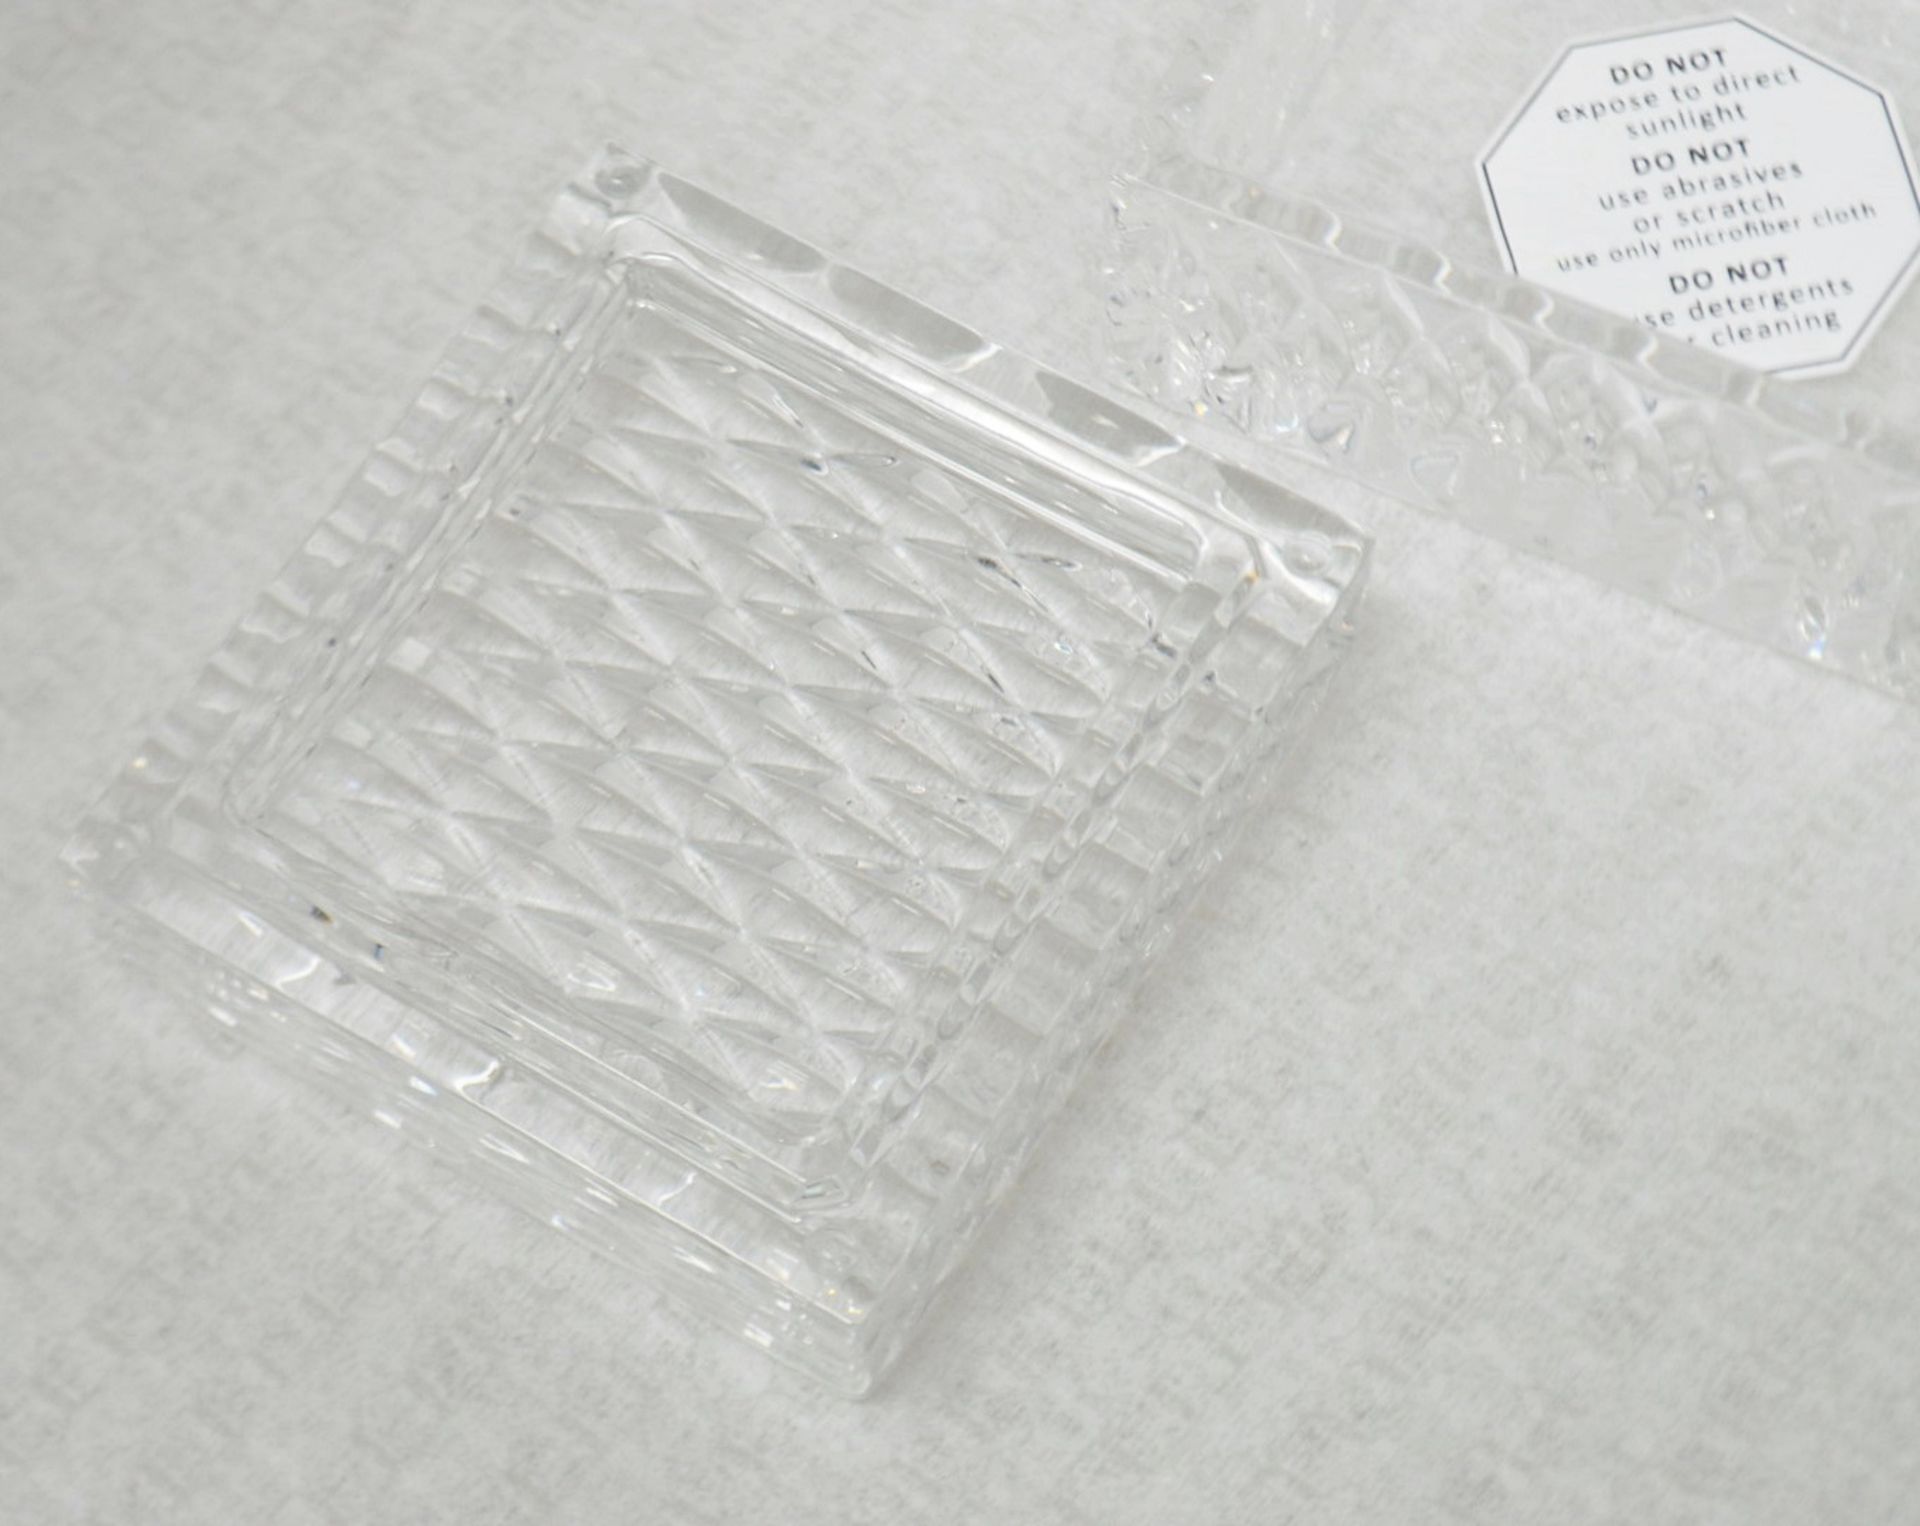 1 x BALDI 'Home Jewels' Italian Hand-crafted Artisan Clear Diamond Crystal Perfume Box, With A - Image 3 of 5